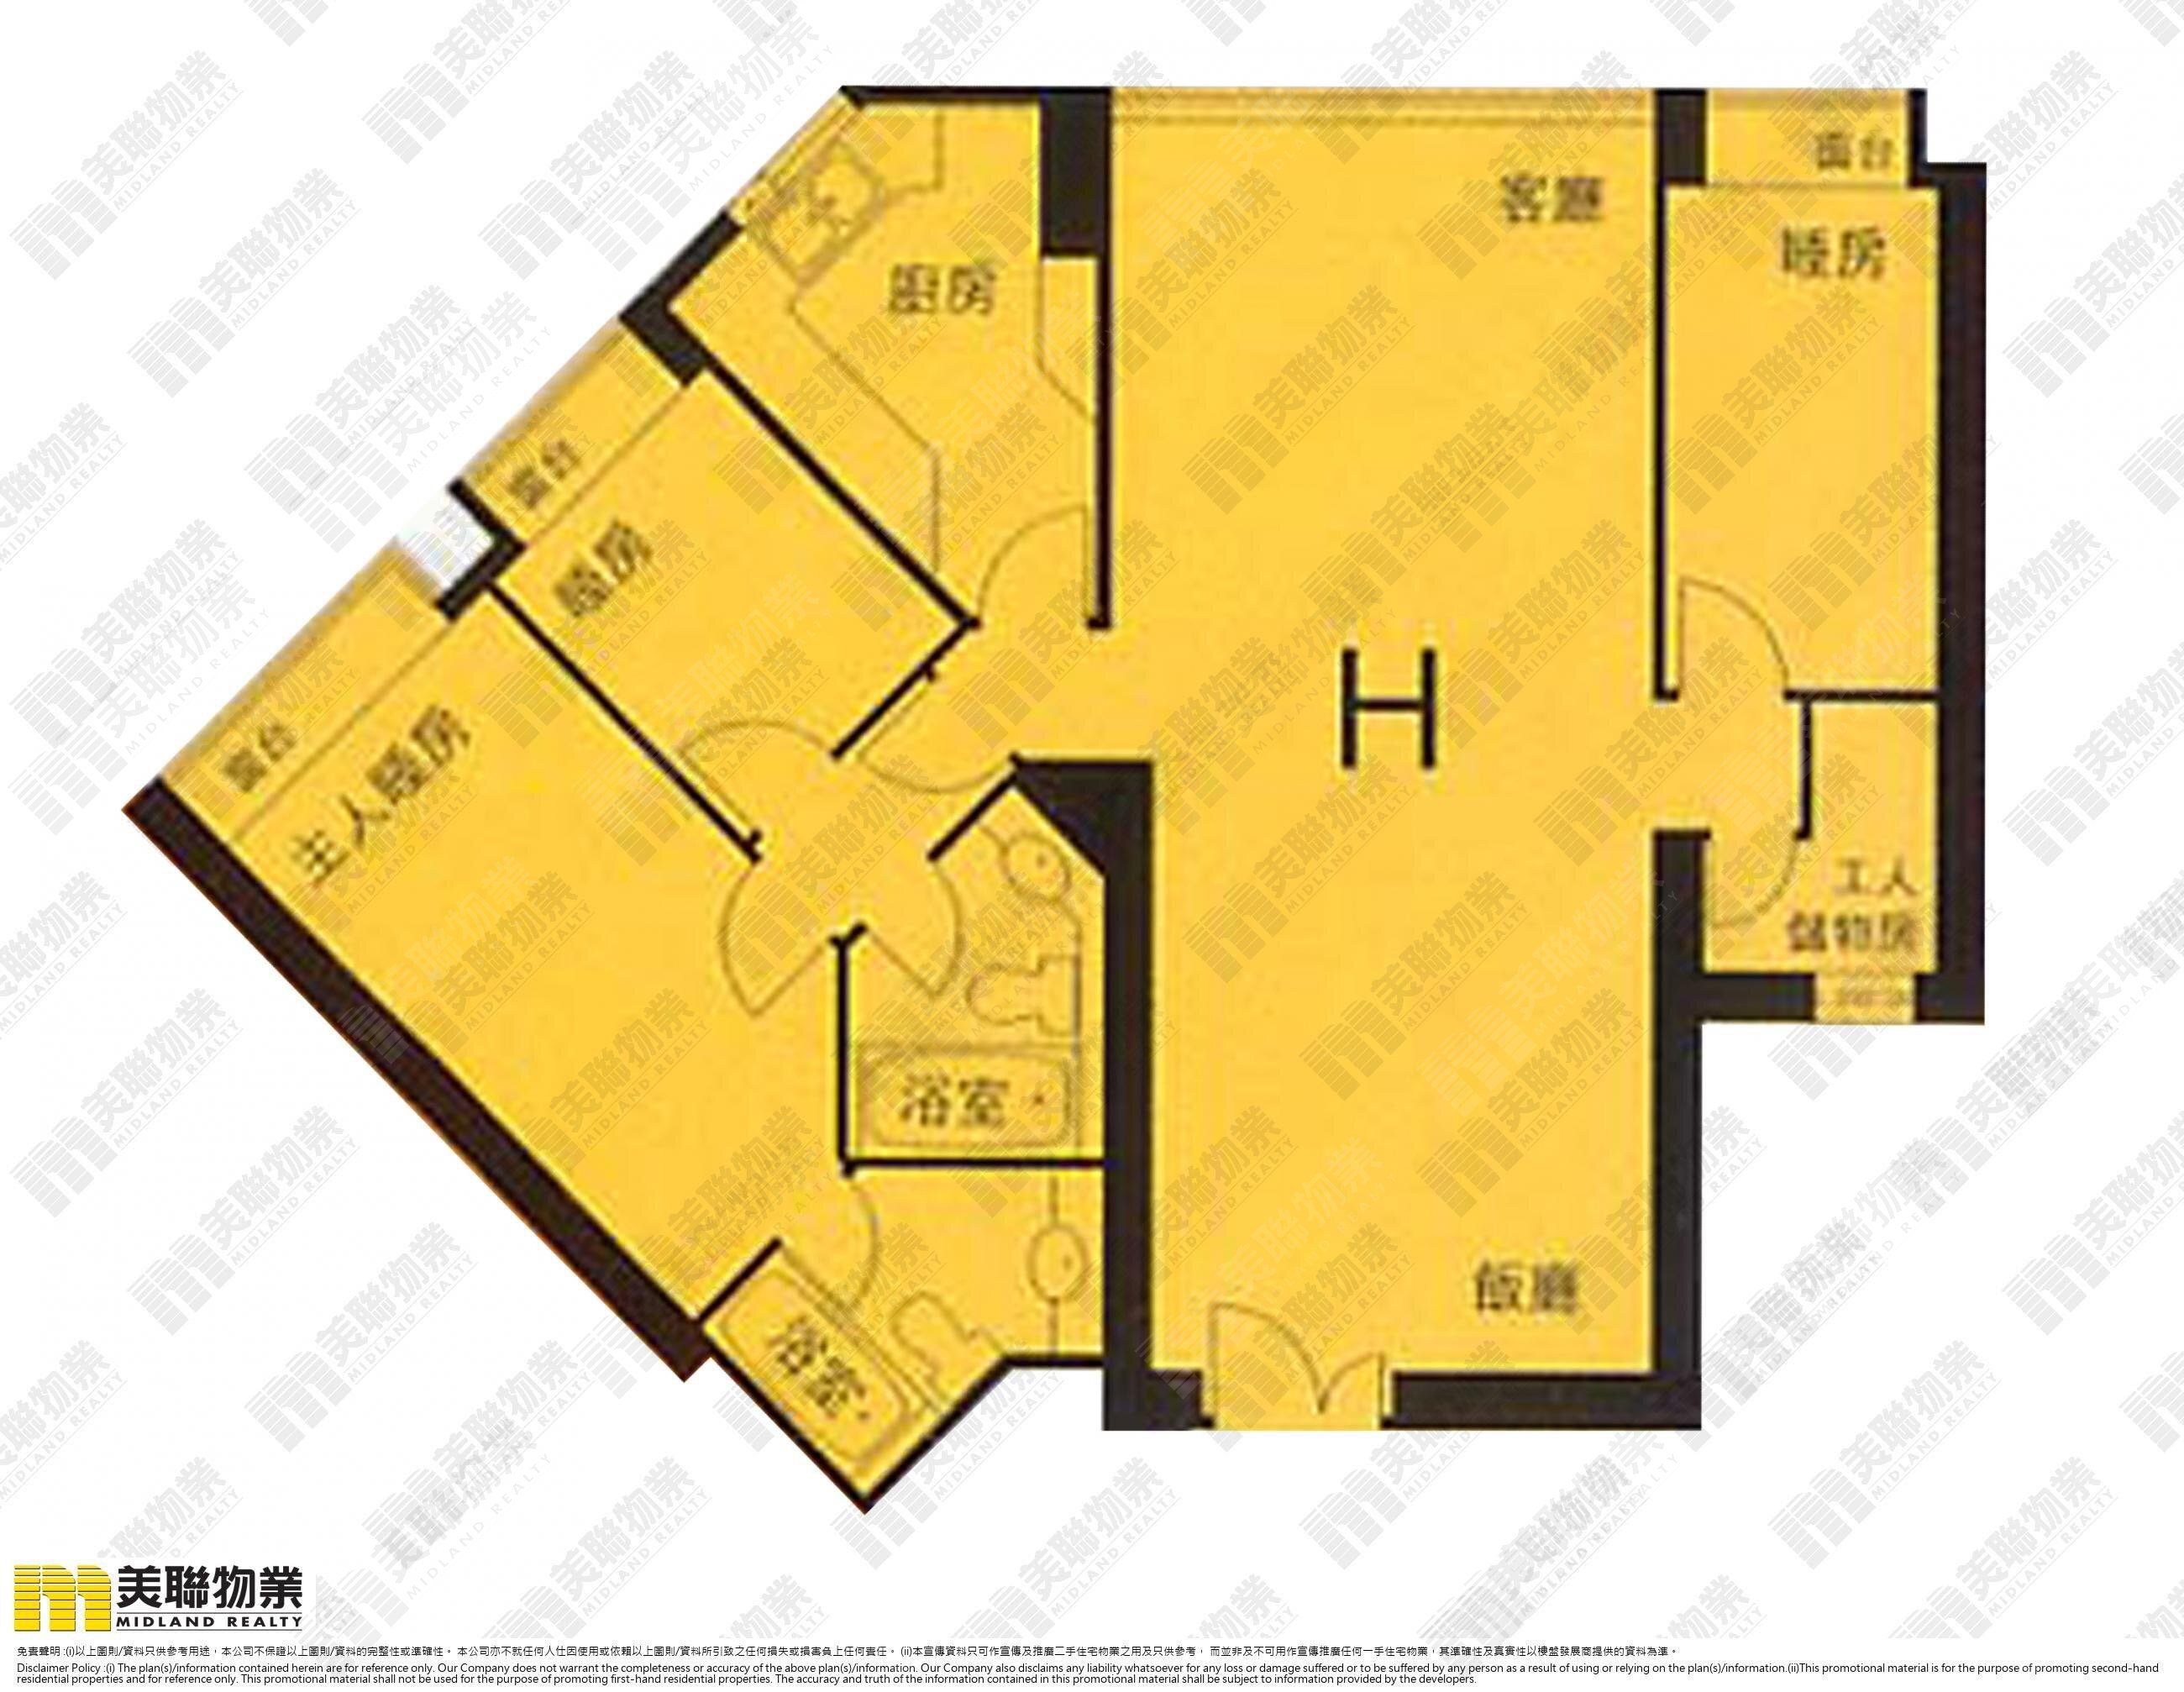 Tung Chung Flat H Lower Floor Block 1 Phase 1 Caribbean